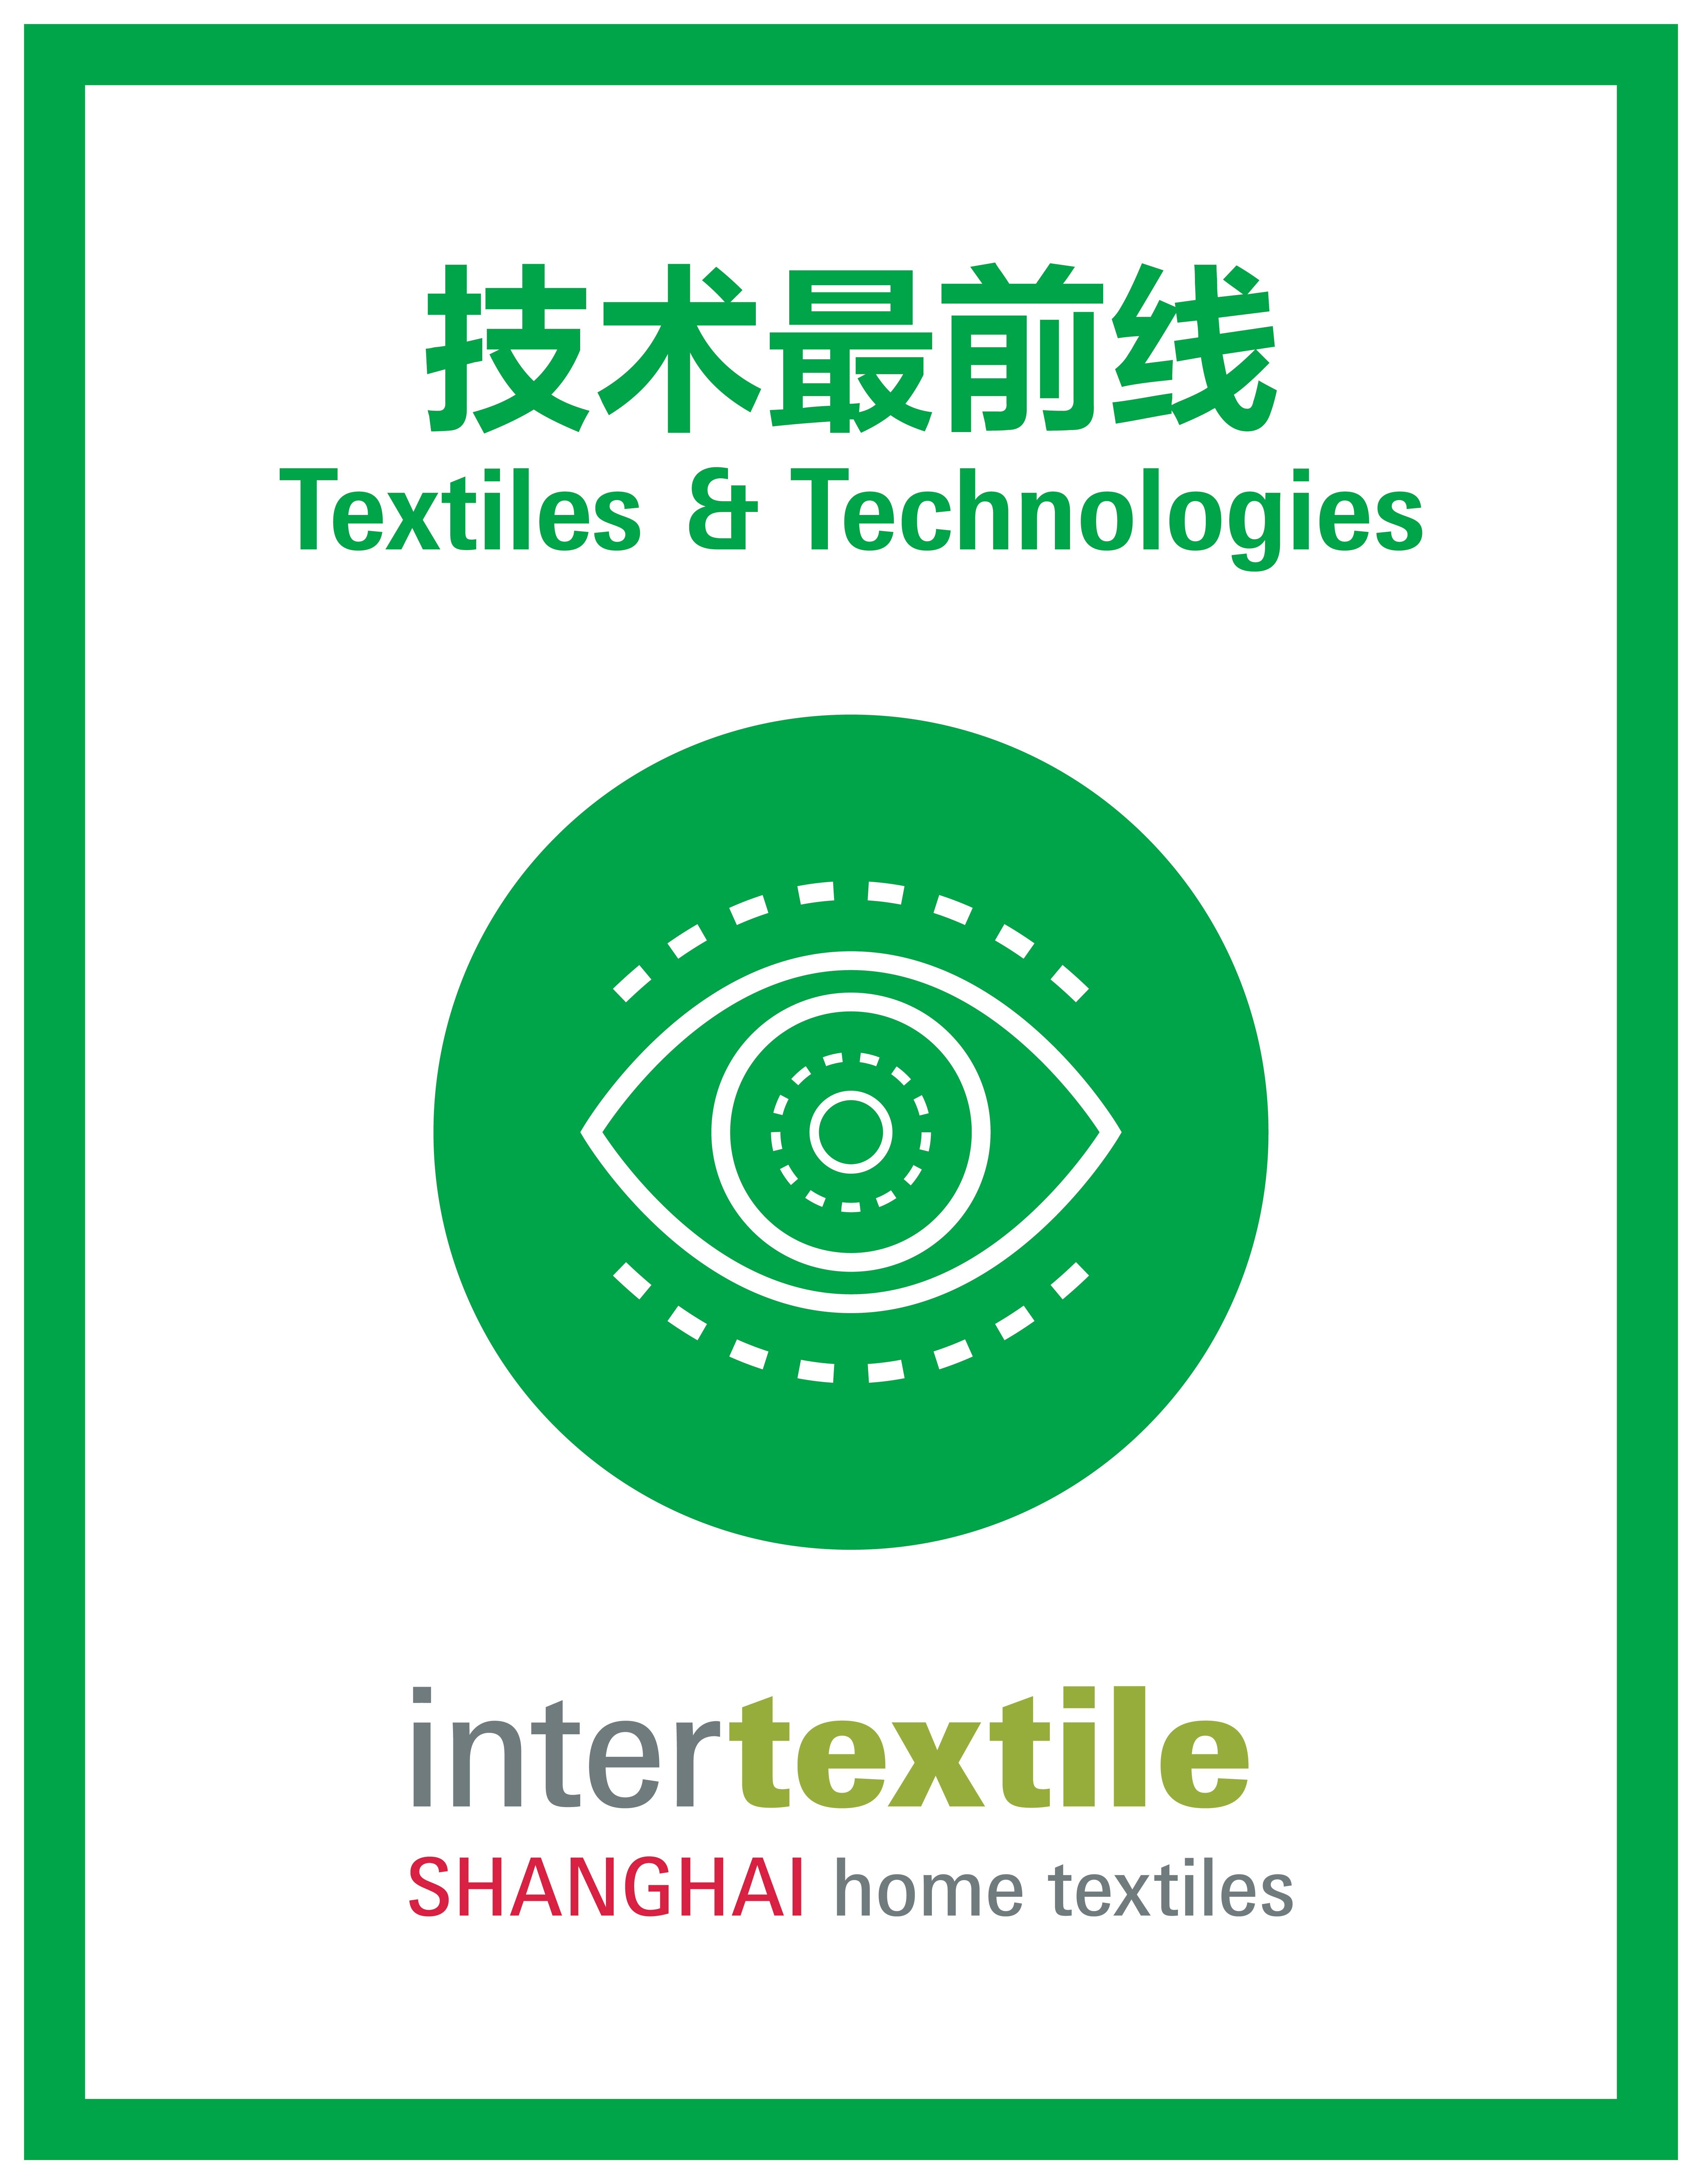 Textiles & Technologies